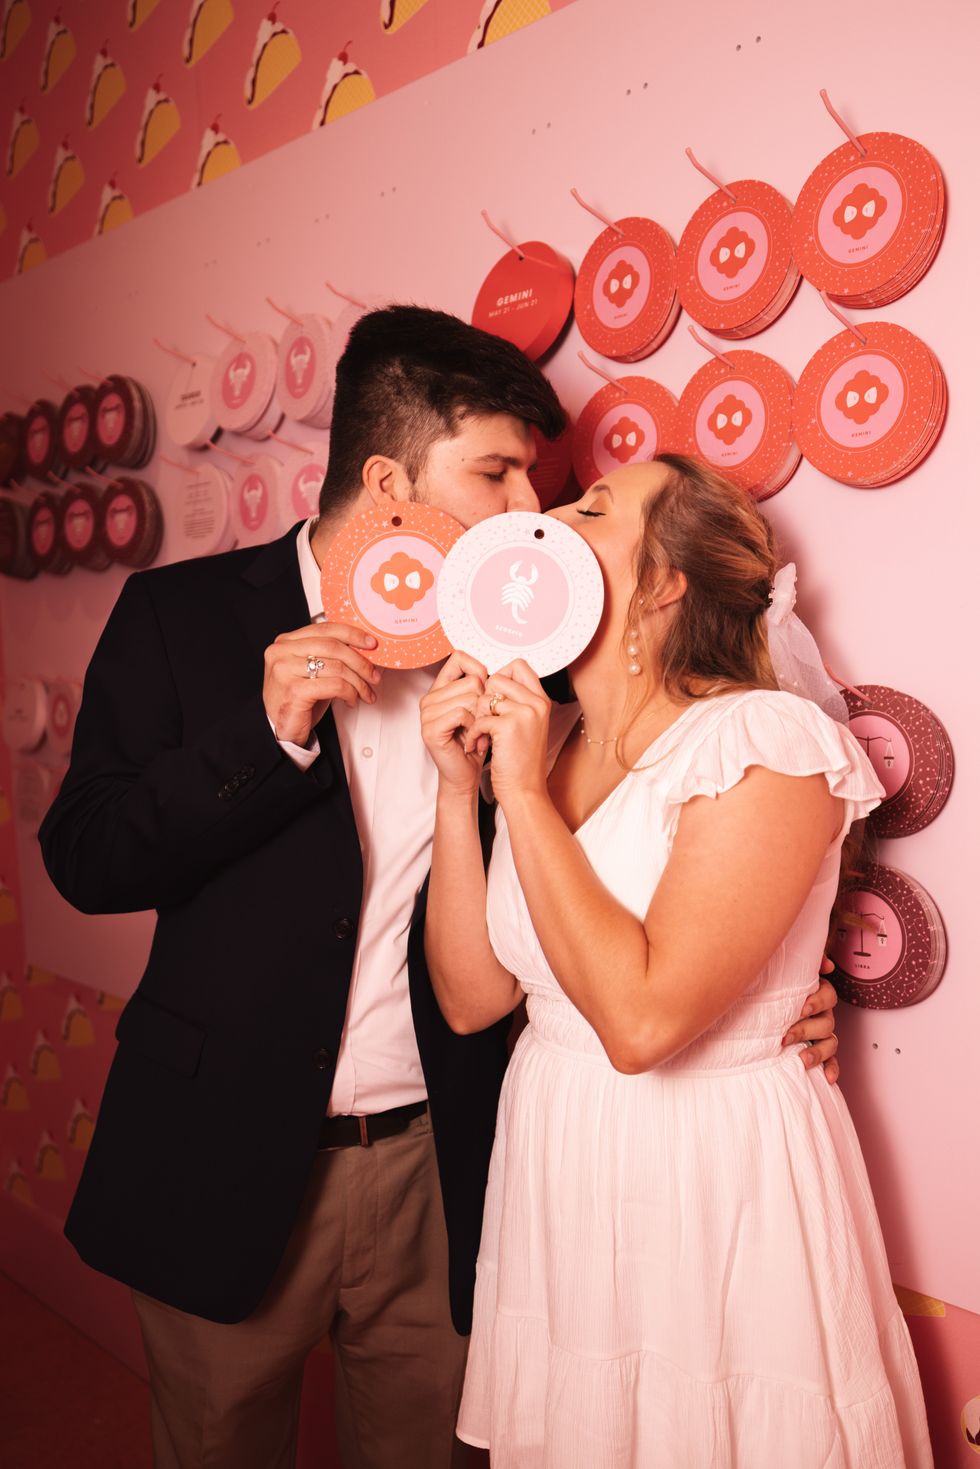 Sara and Conor Wagner, Museum of Ice Cream, Austin wedding